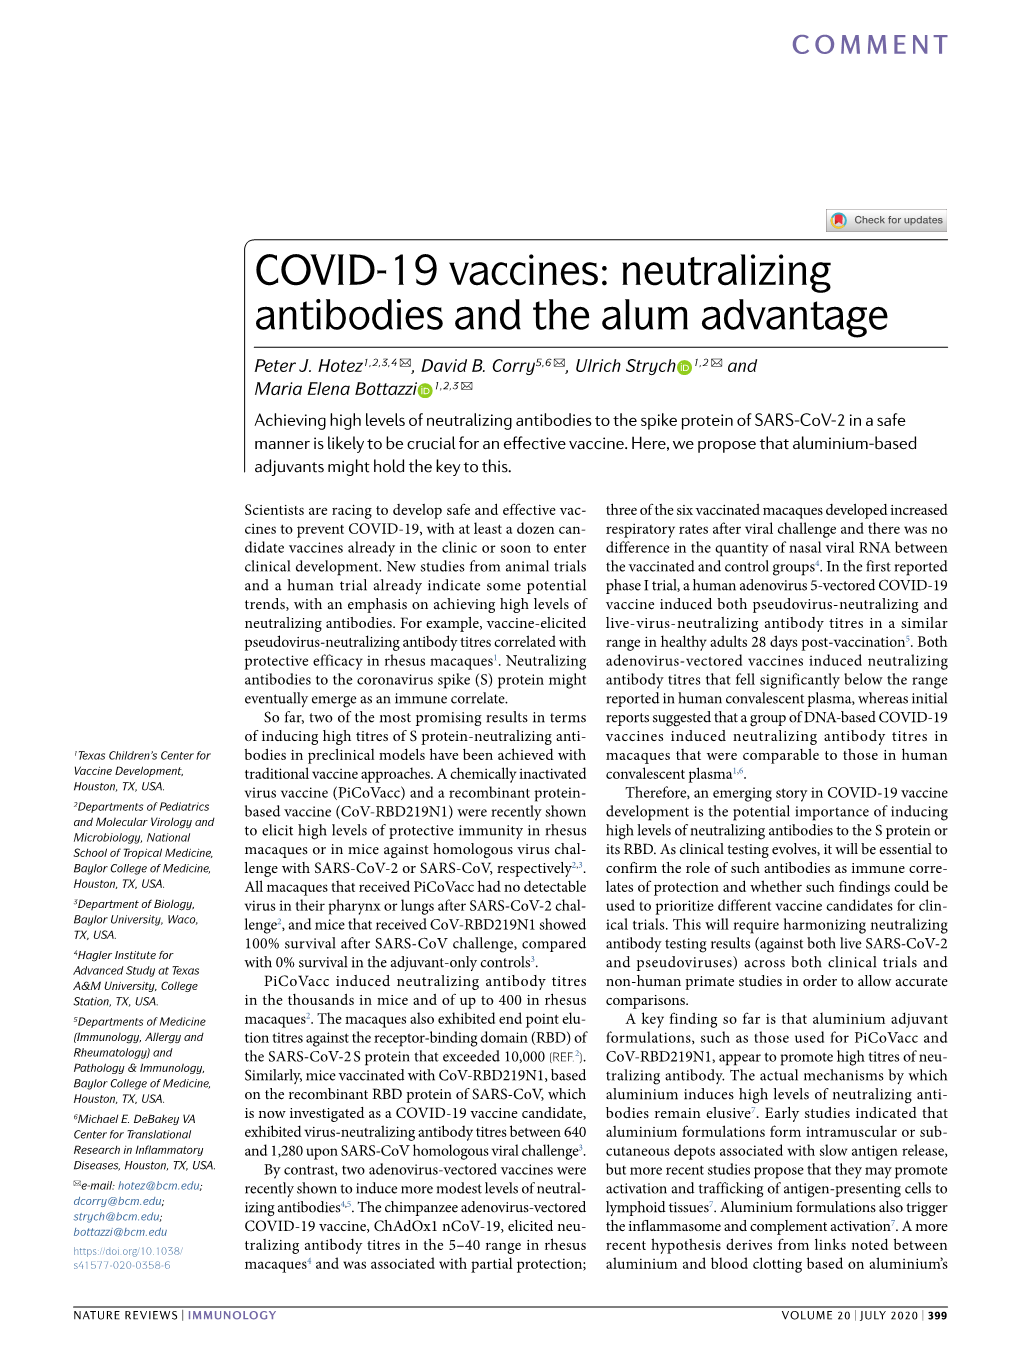 COVID-19 Vaccines: Neutralizing Antibodies and the Alum Advantage